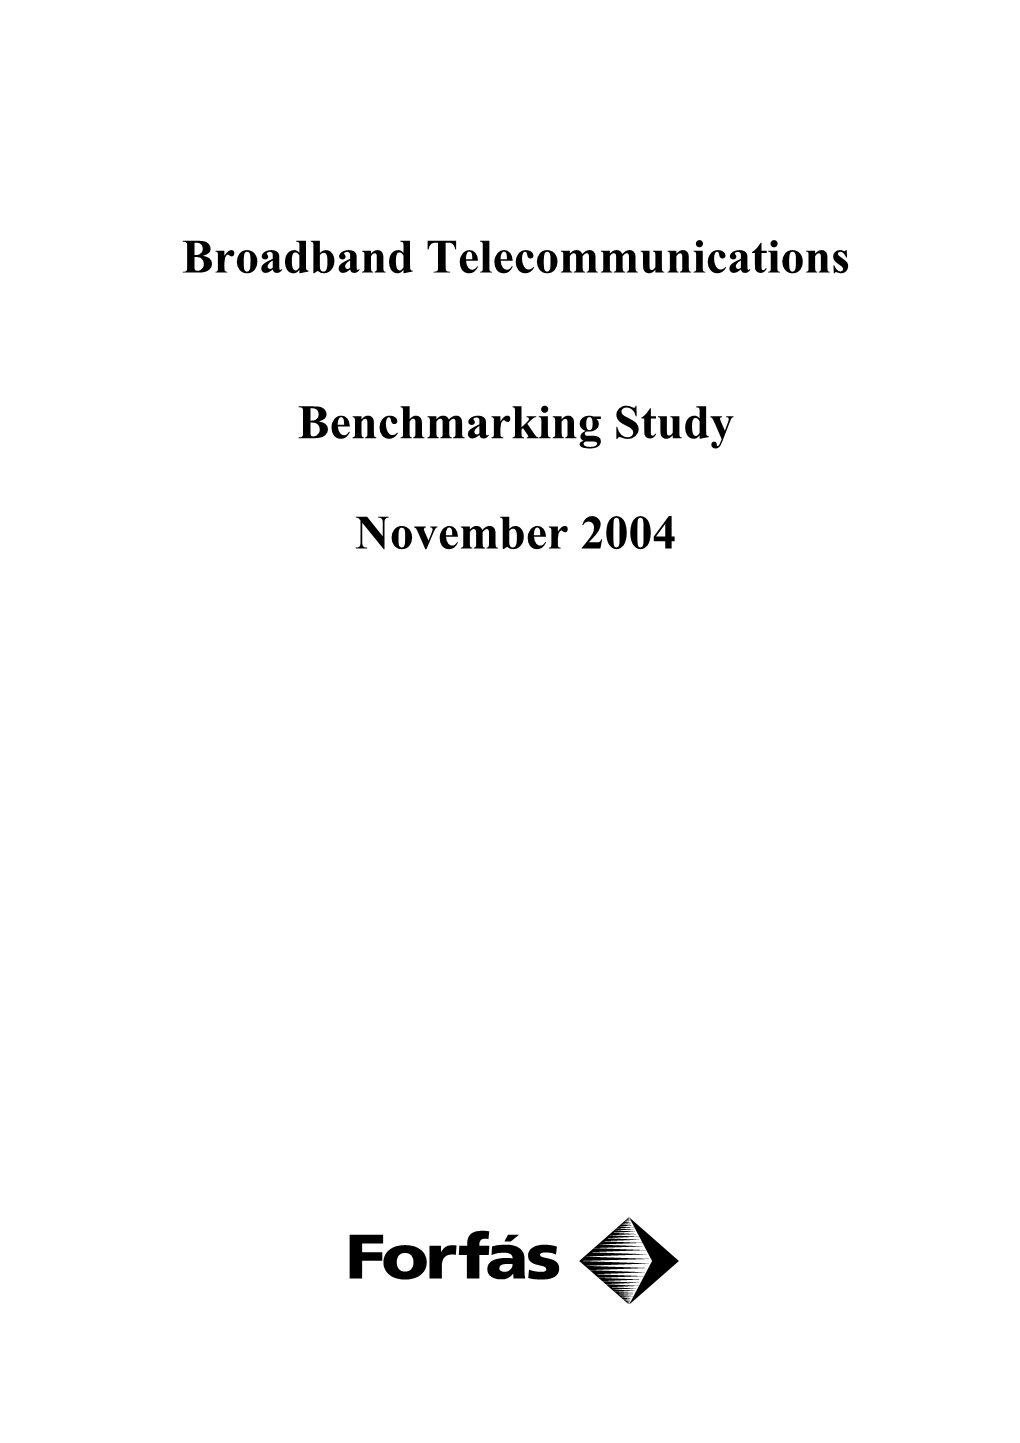 Broadband Telecommunications Benchmarking Study November 2004